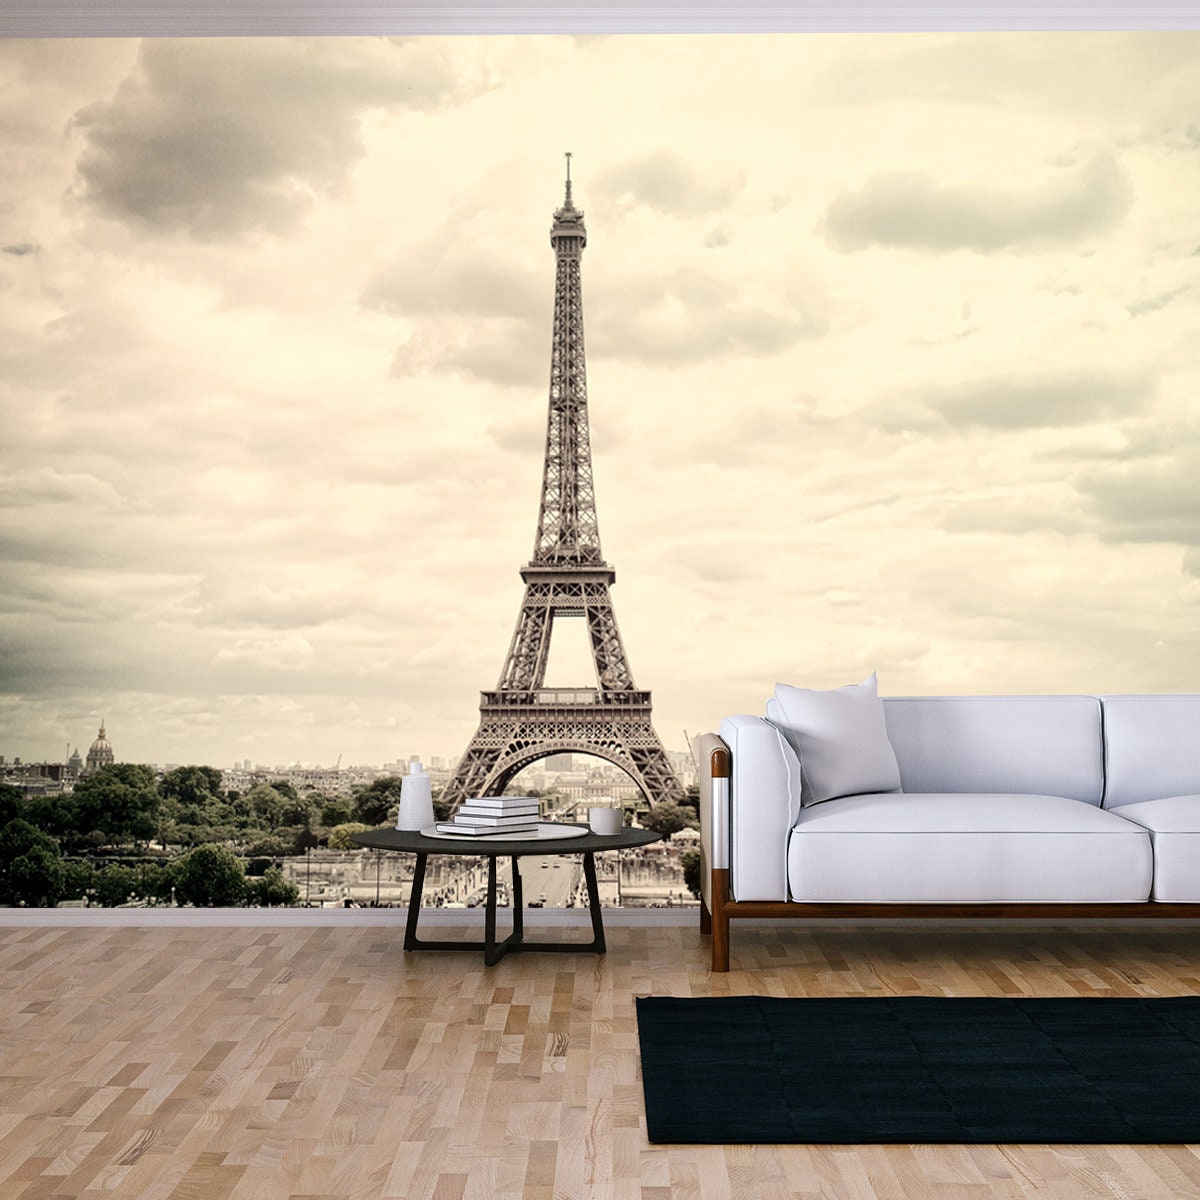 Panorama Eiffel Tower in Paris. France. Vintage View Wallpaper Living Room Mural